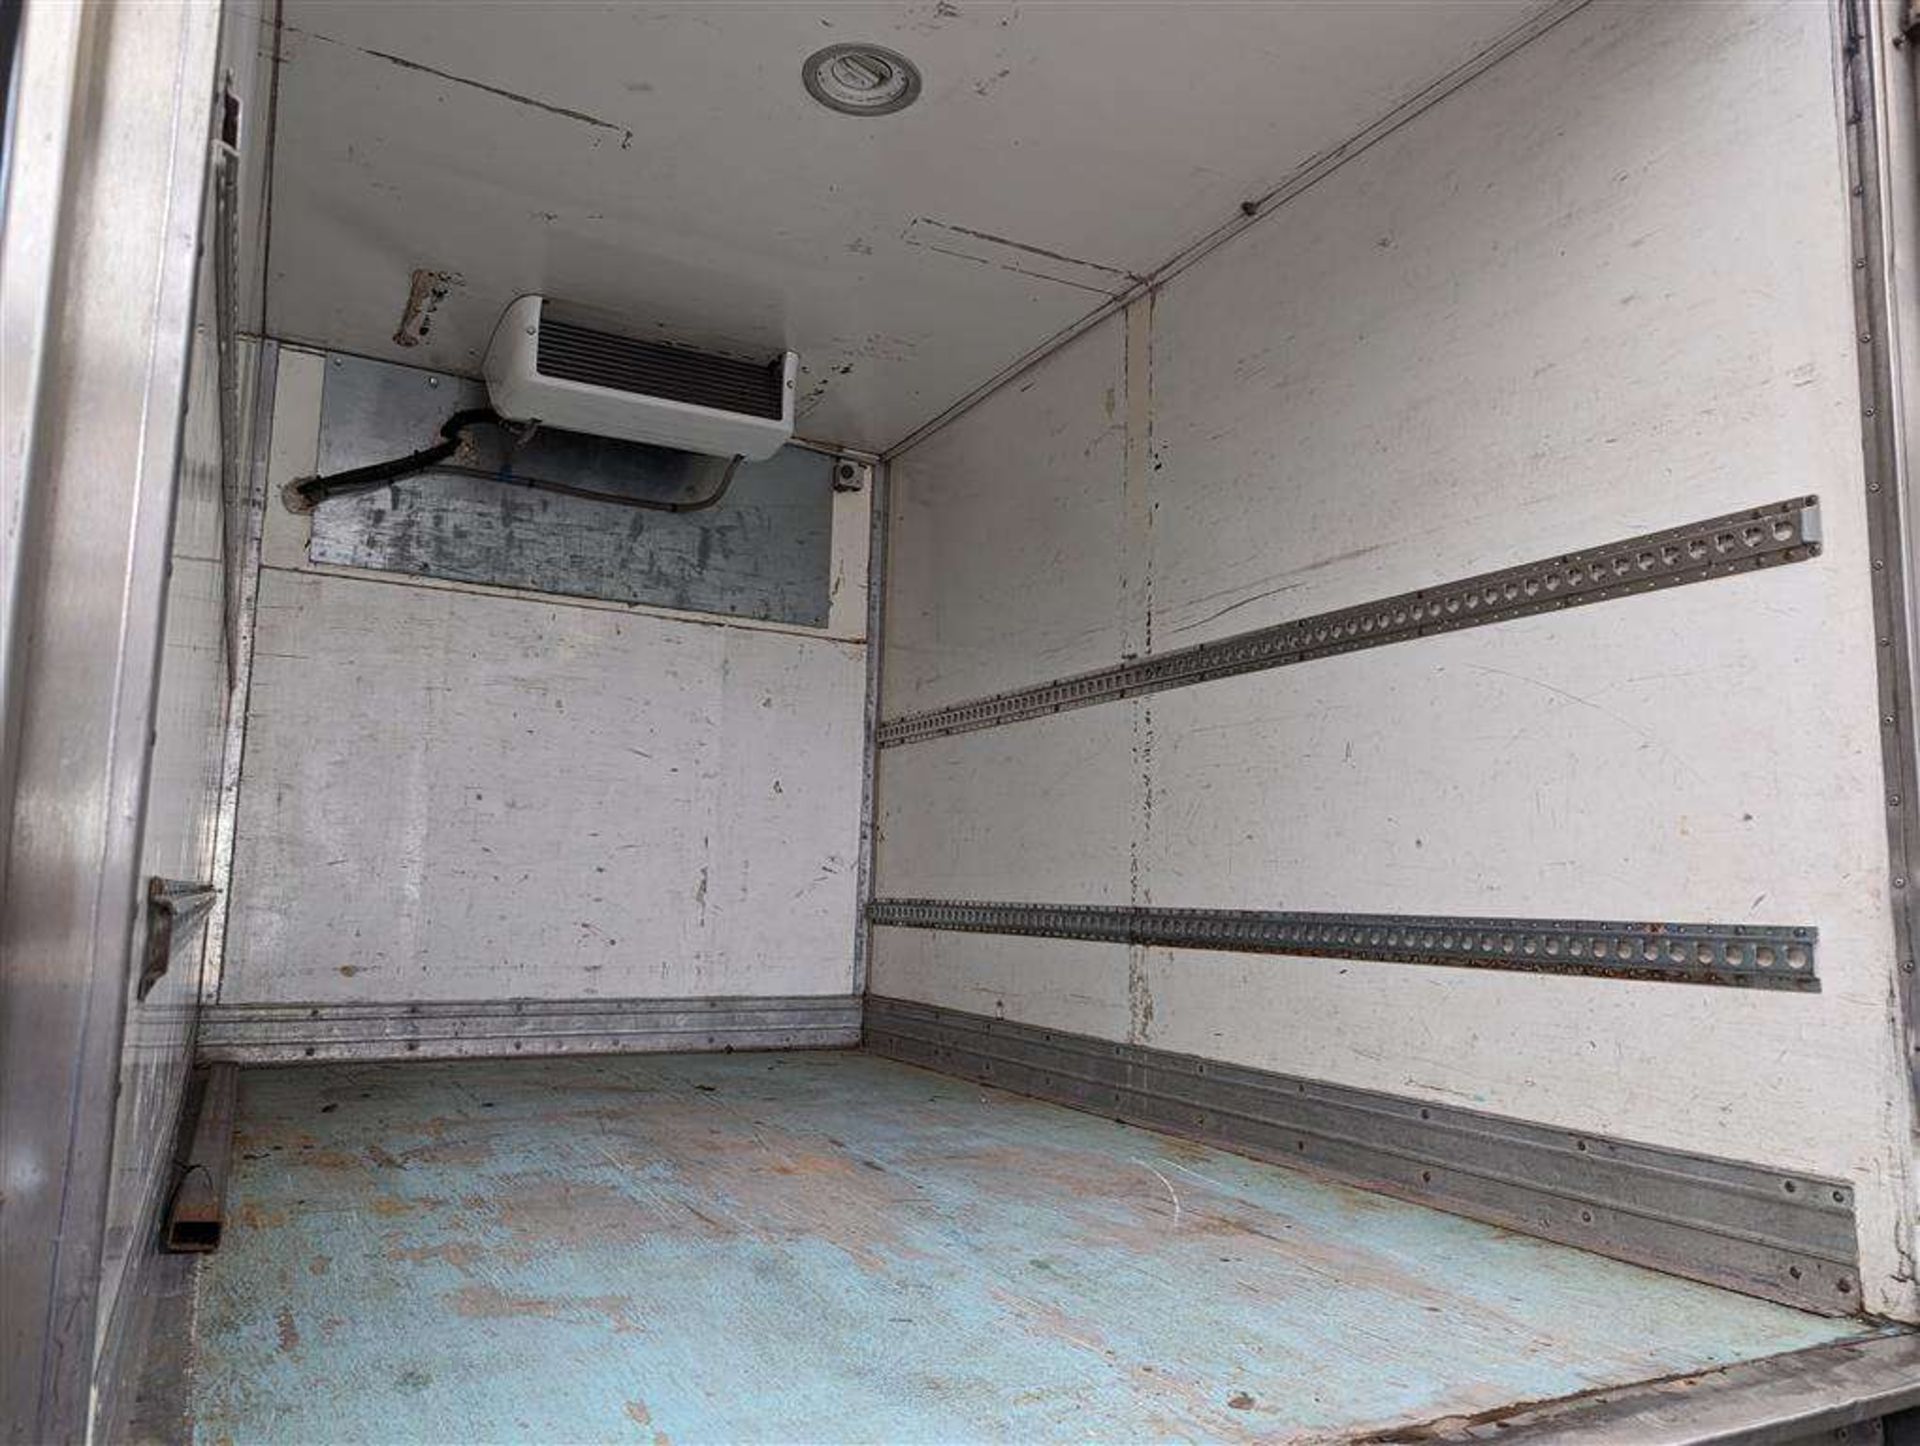 2019 PEUGEOT BOXER 335 L2 BLUEHDI Refrigerated van - Image 8 of 26